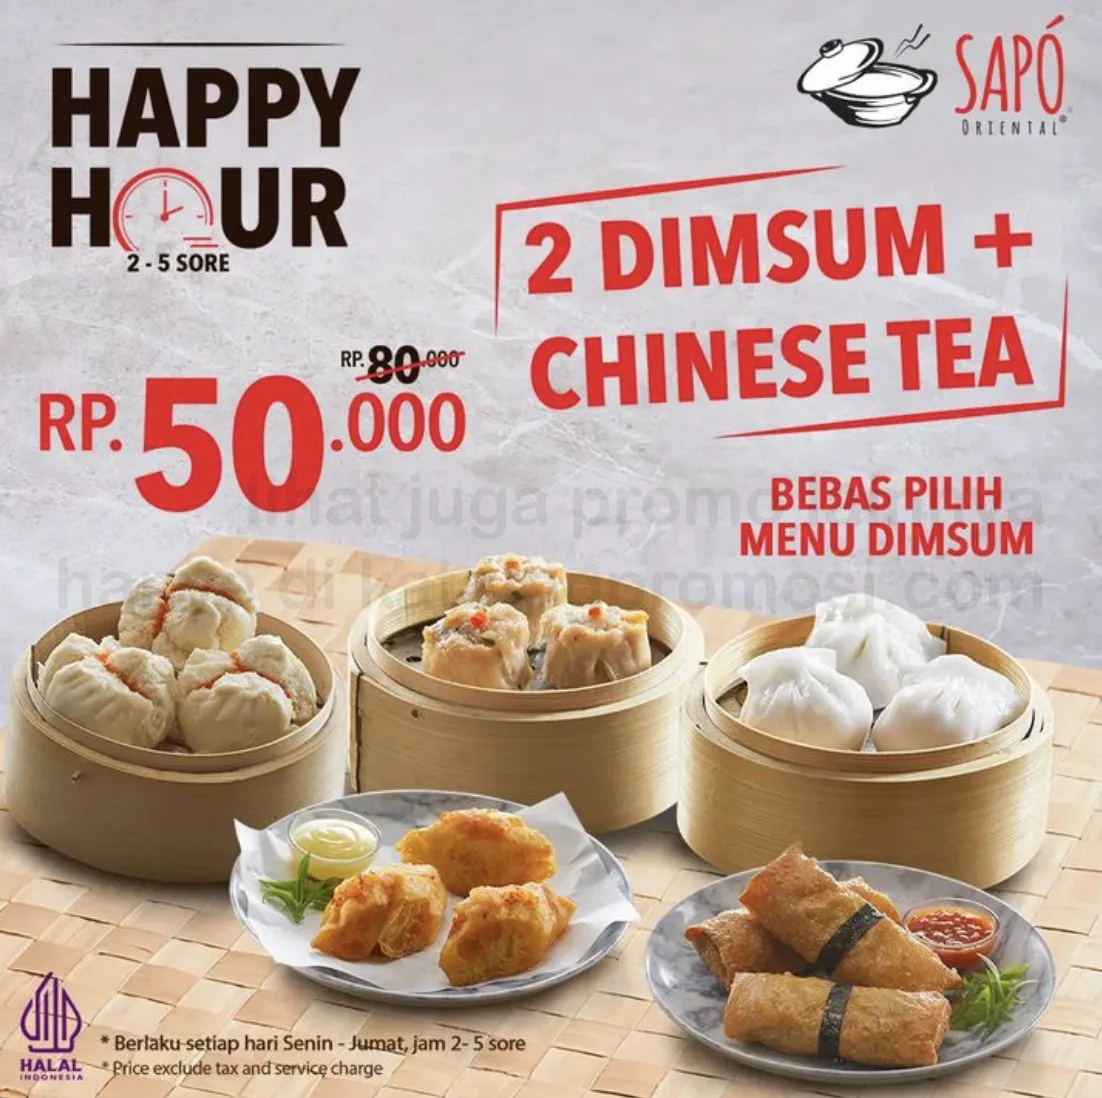 Promo SAPO ORIENTAL HAPPY HOUR - Paket 2 Aneka Menu Dimsum + Chinese Tea hanya Rp. 50,000